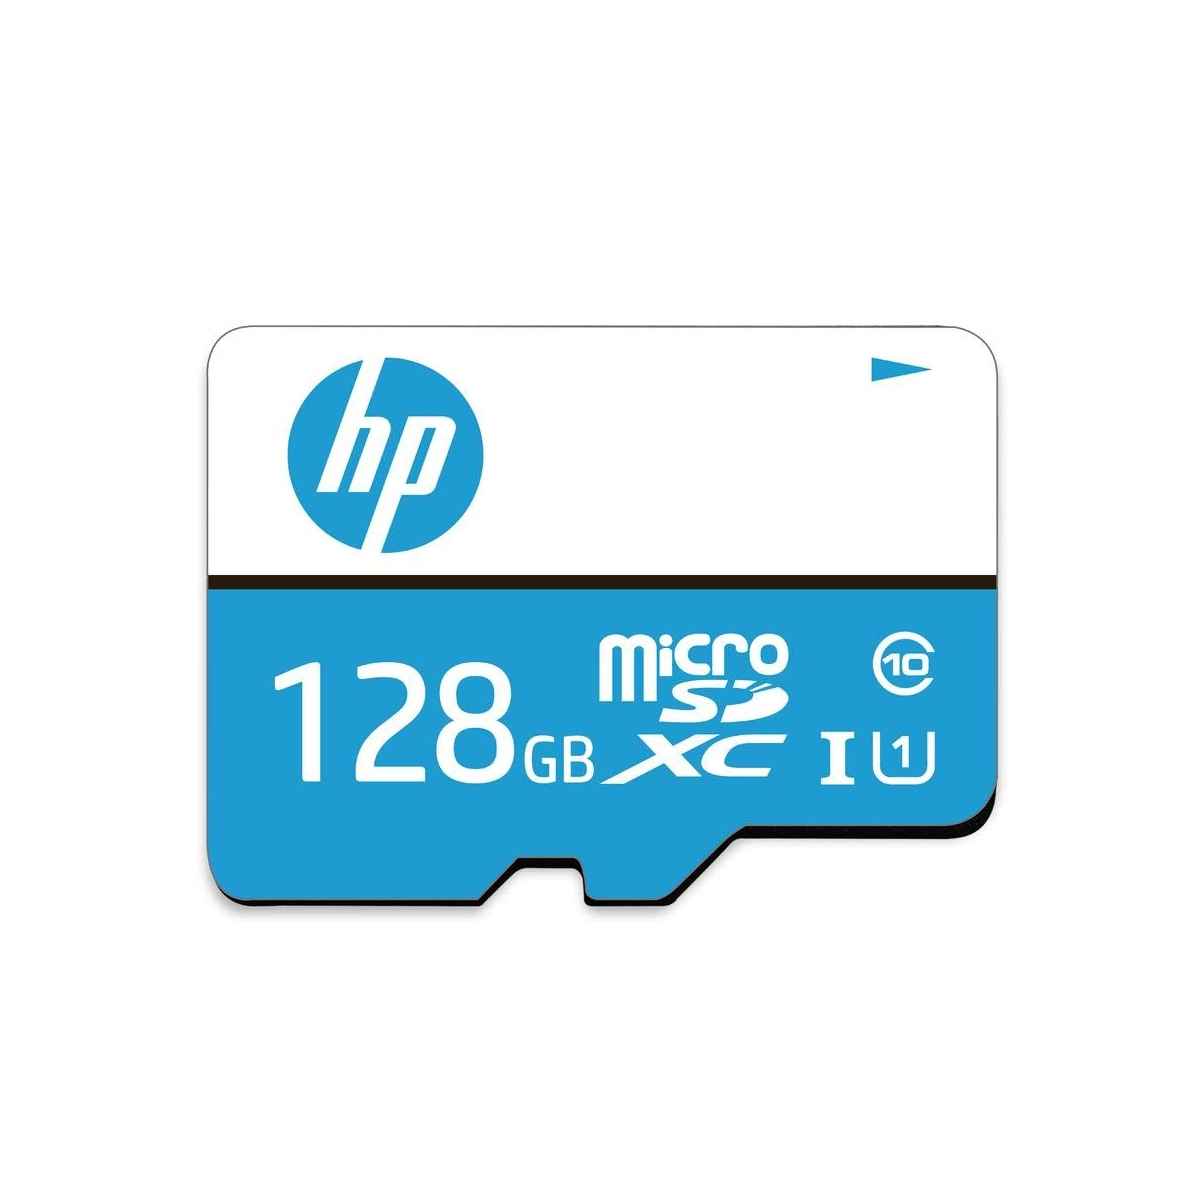 HP128GB MicroSD Memory Card